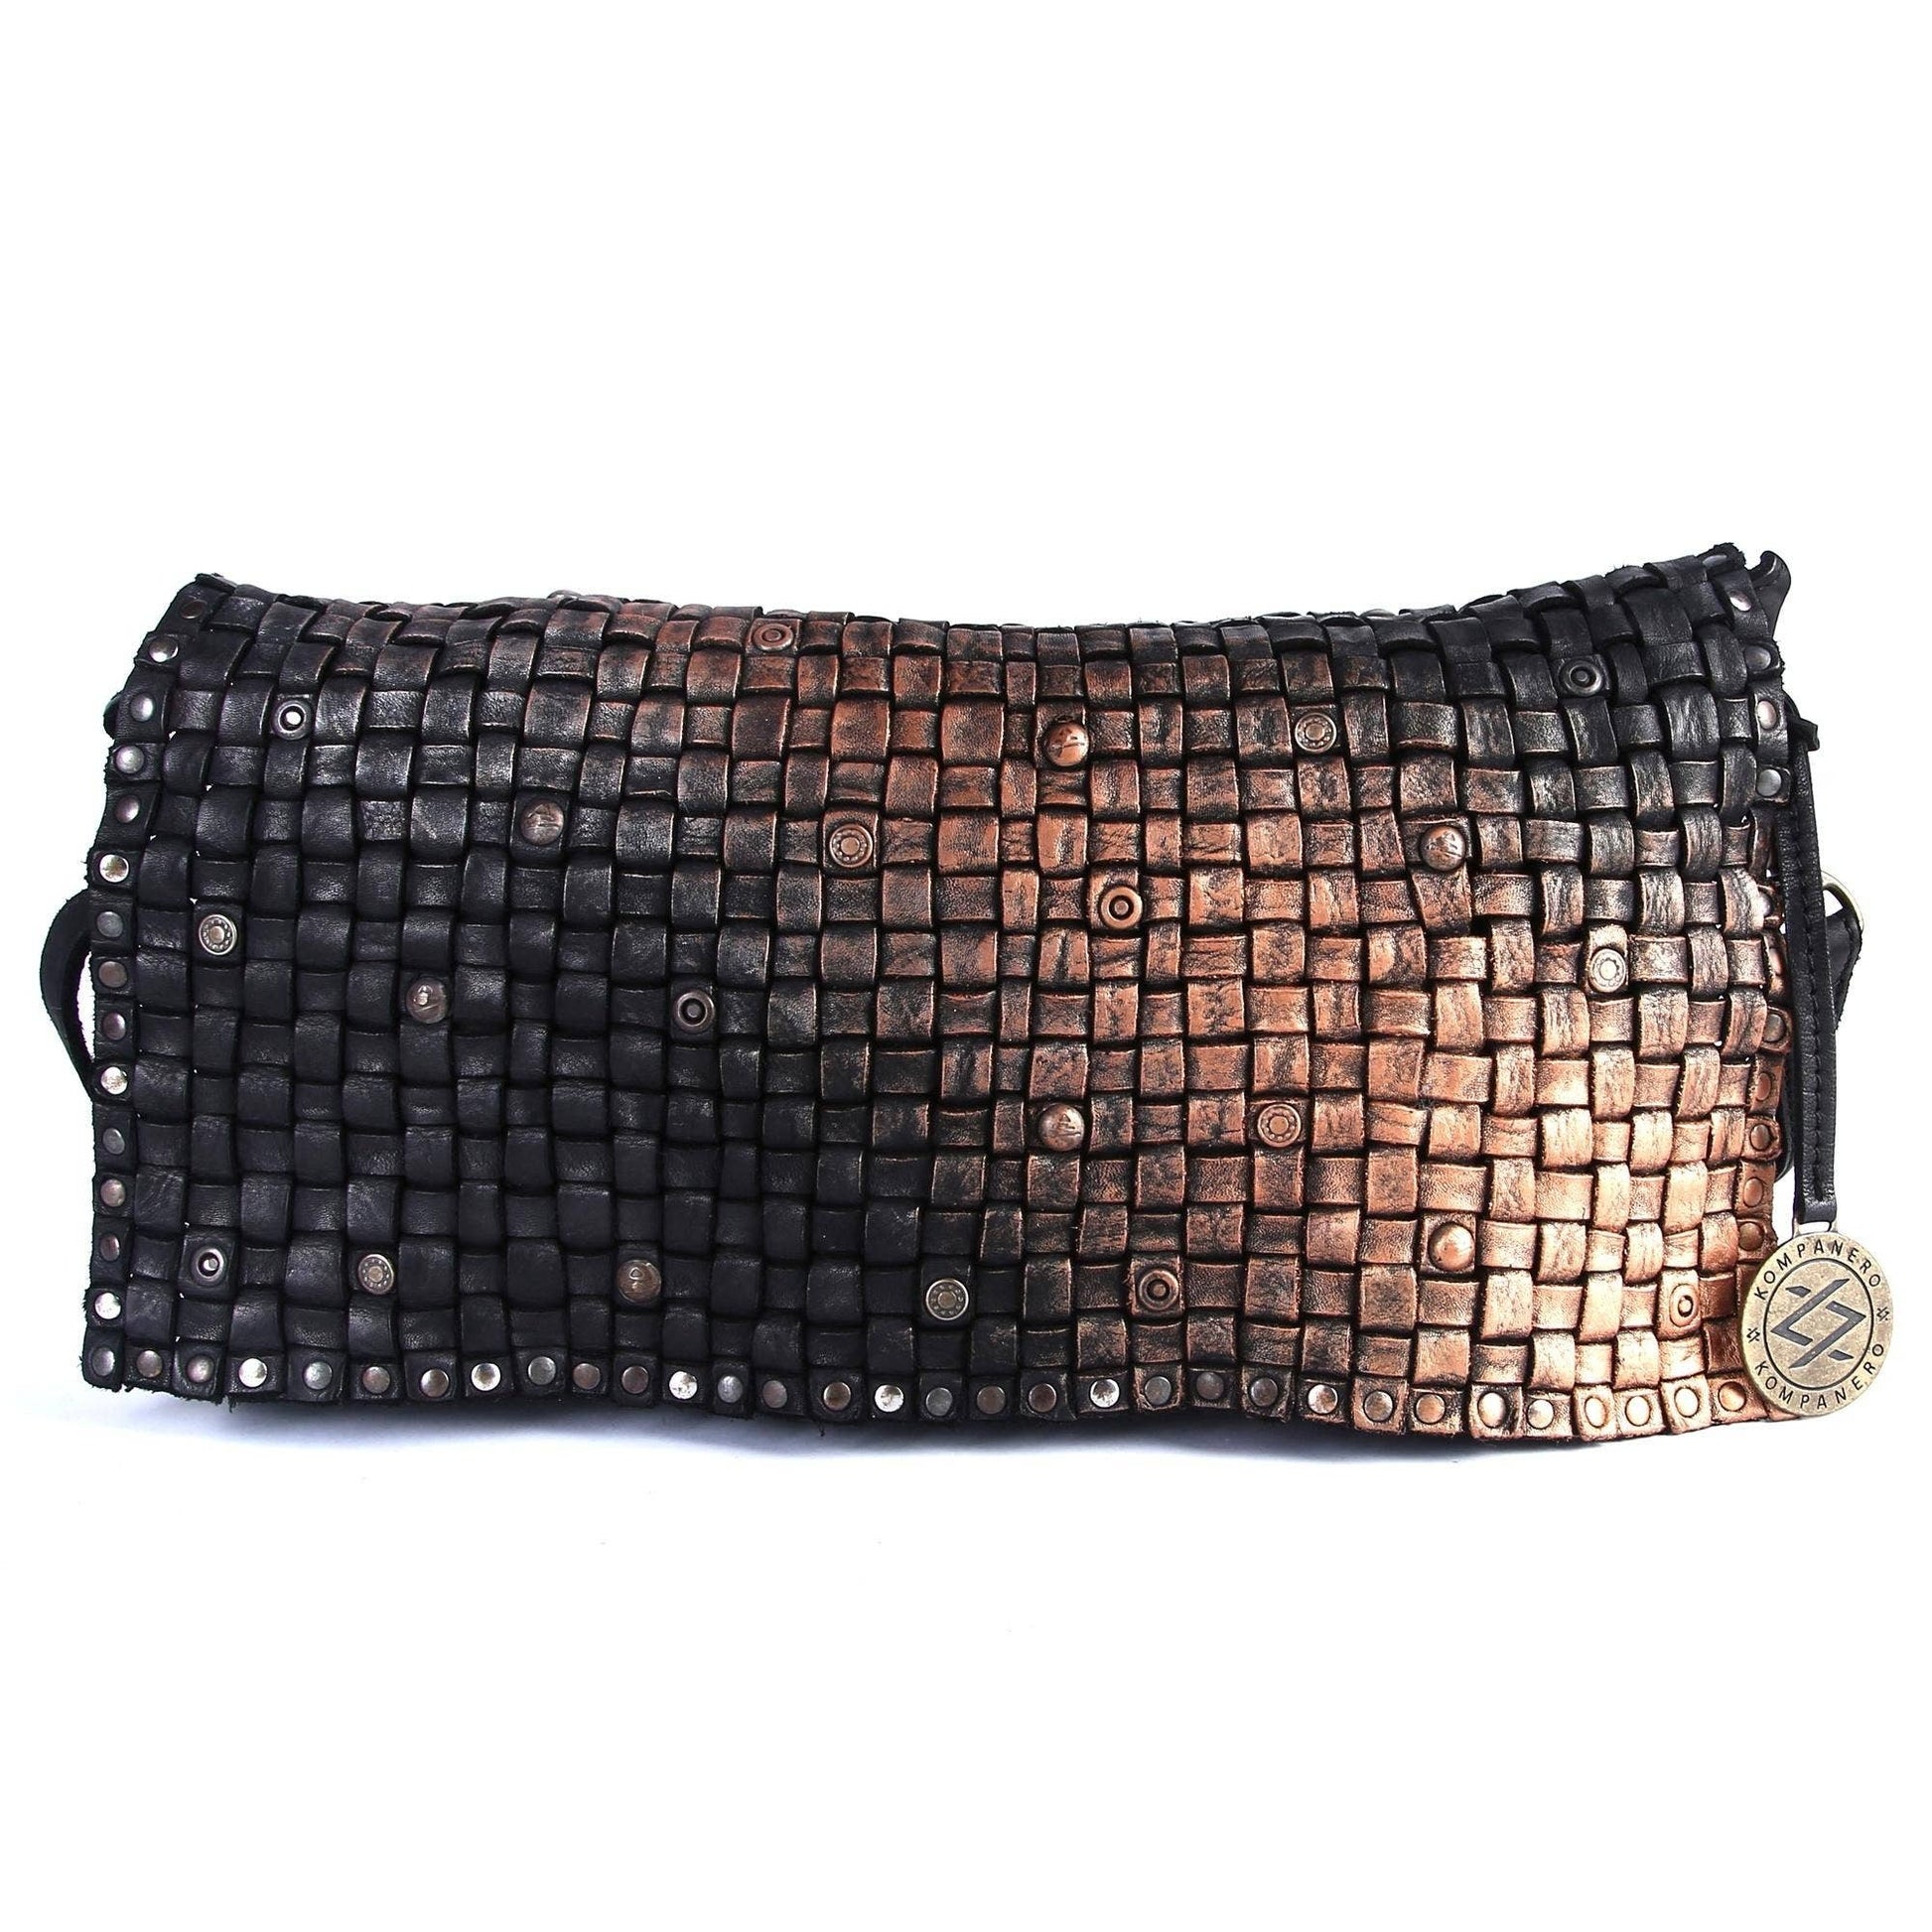 Genuine Leather Fold Over Studded Bag - Athenian - Black front